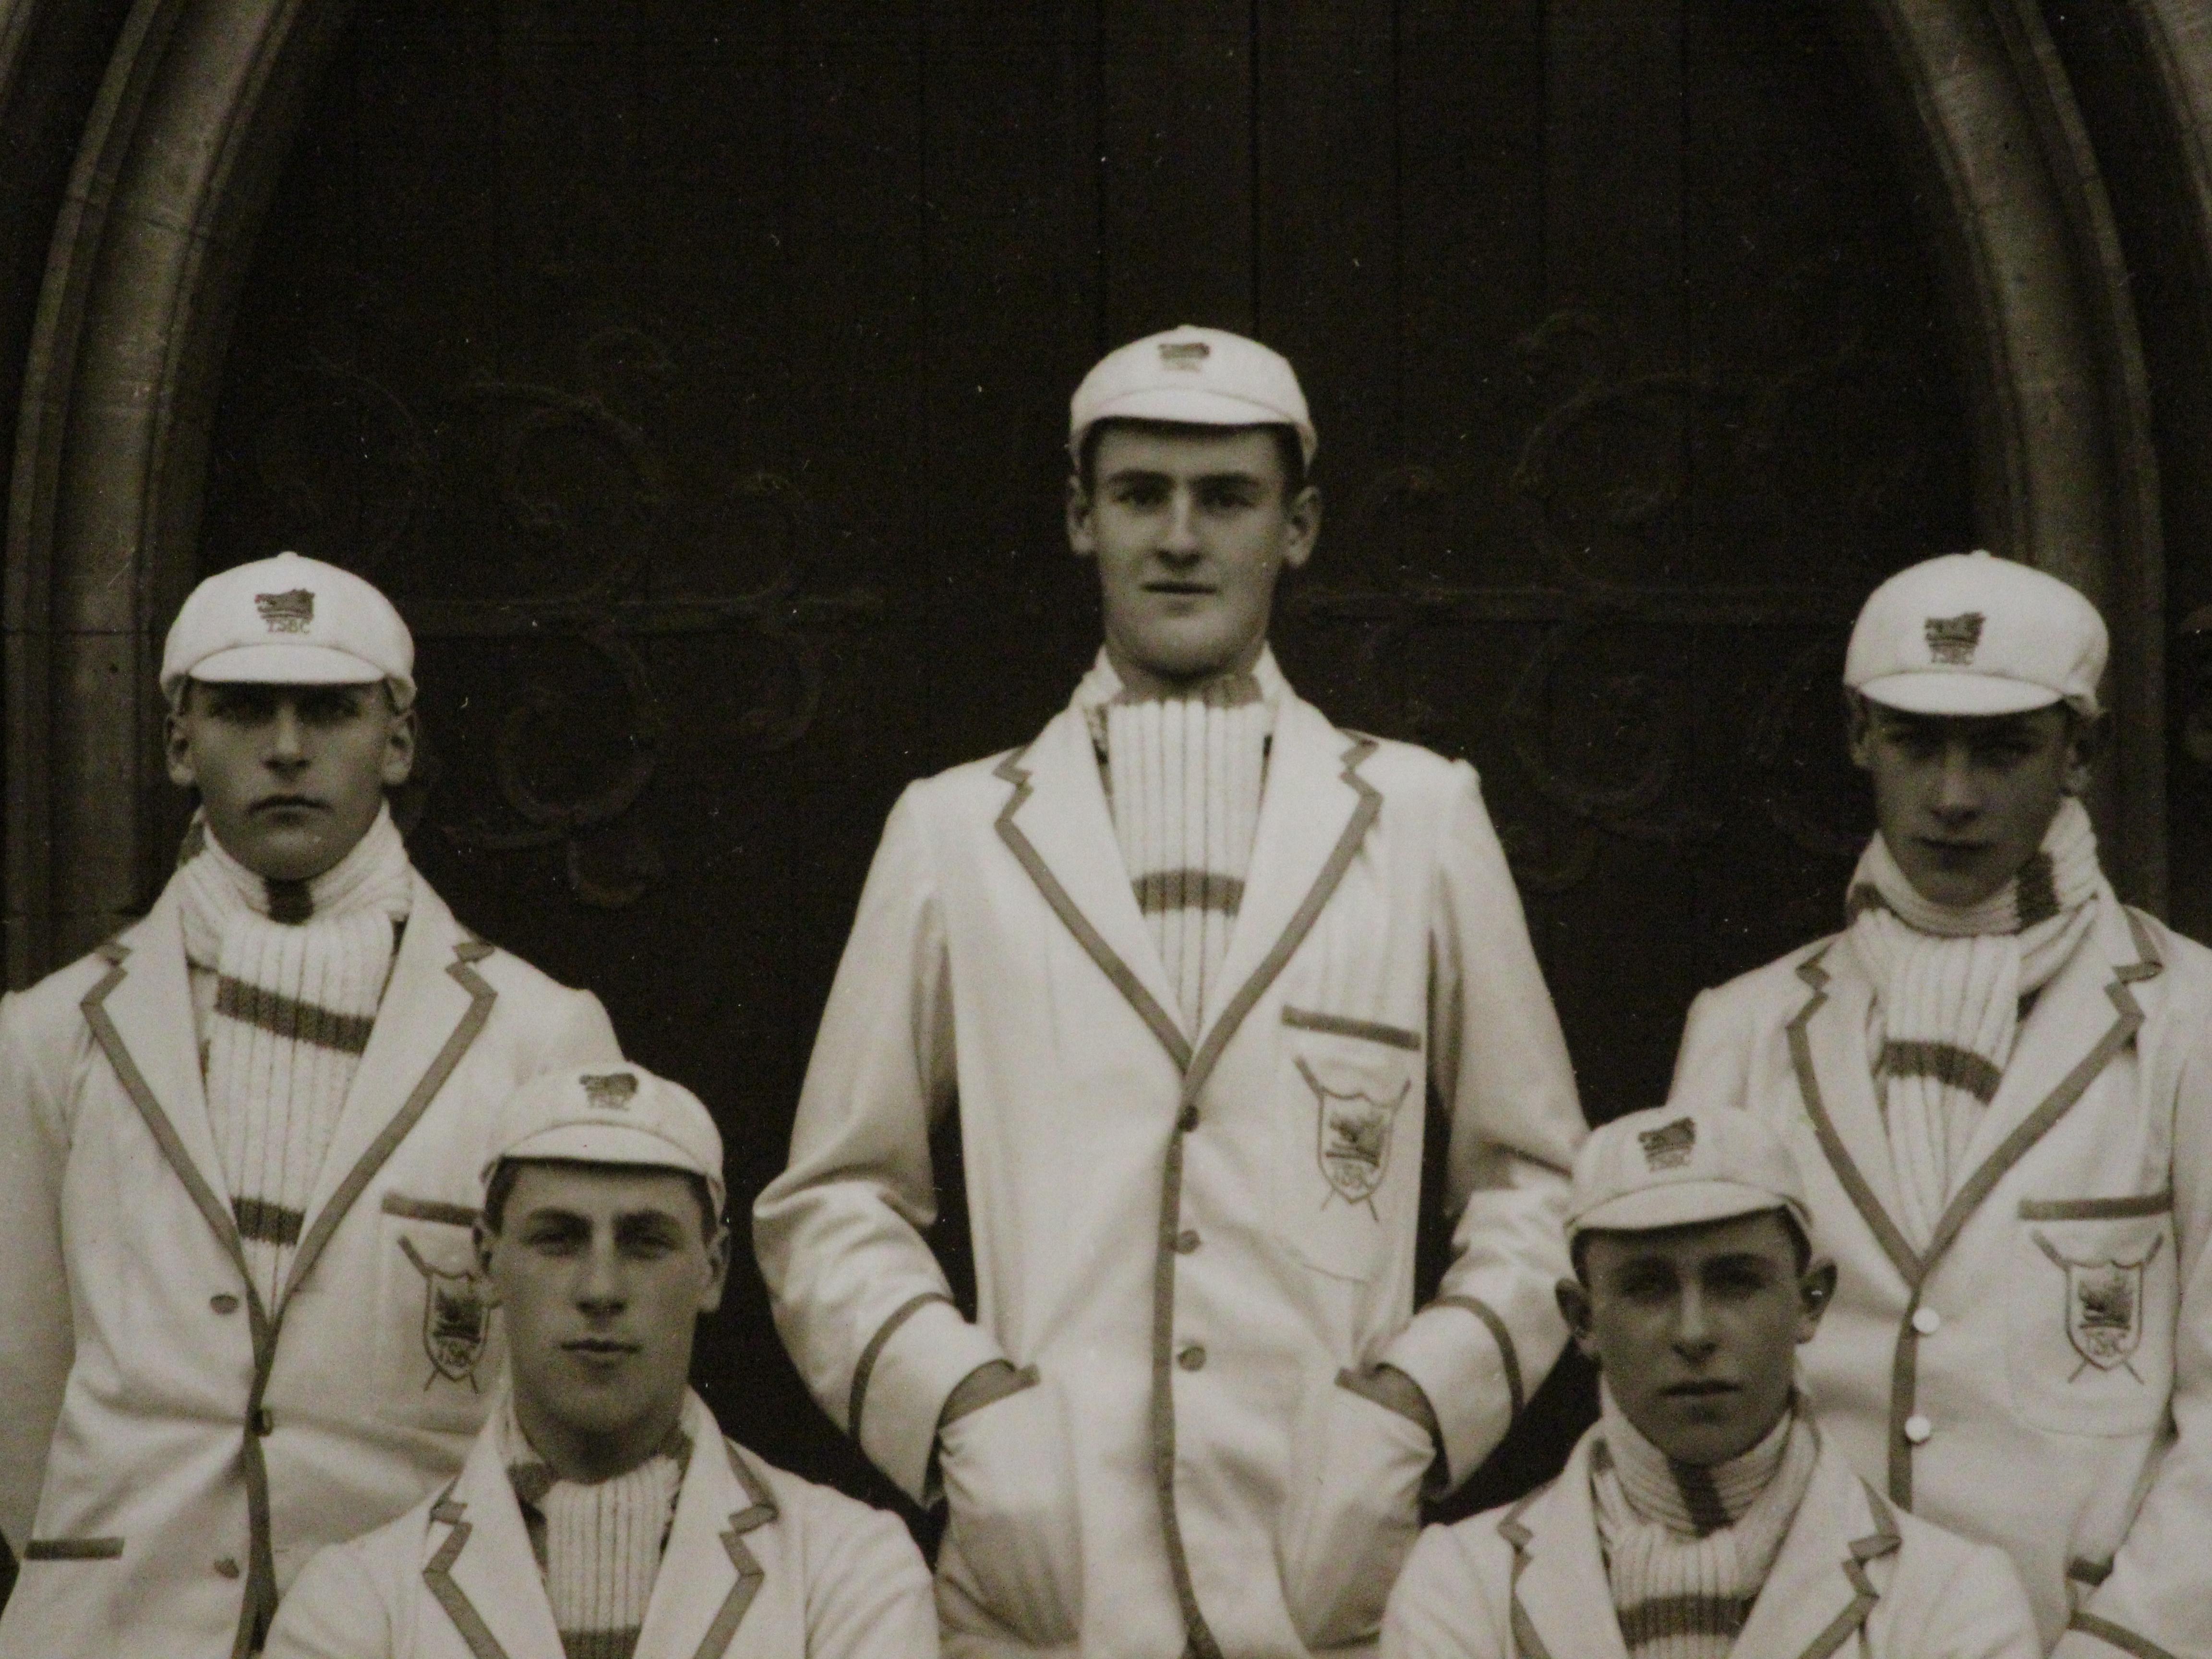 B&W c1920s photo depicting an English school boys' cricket team TSBC in classic rowing blazer attire

Photo Sz: 9 1/4